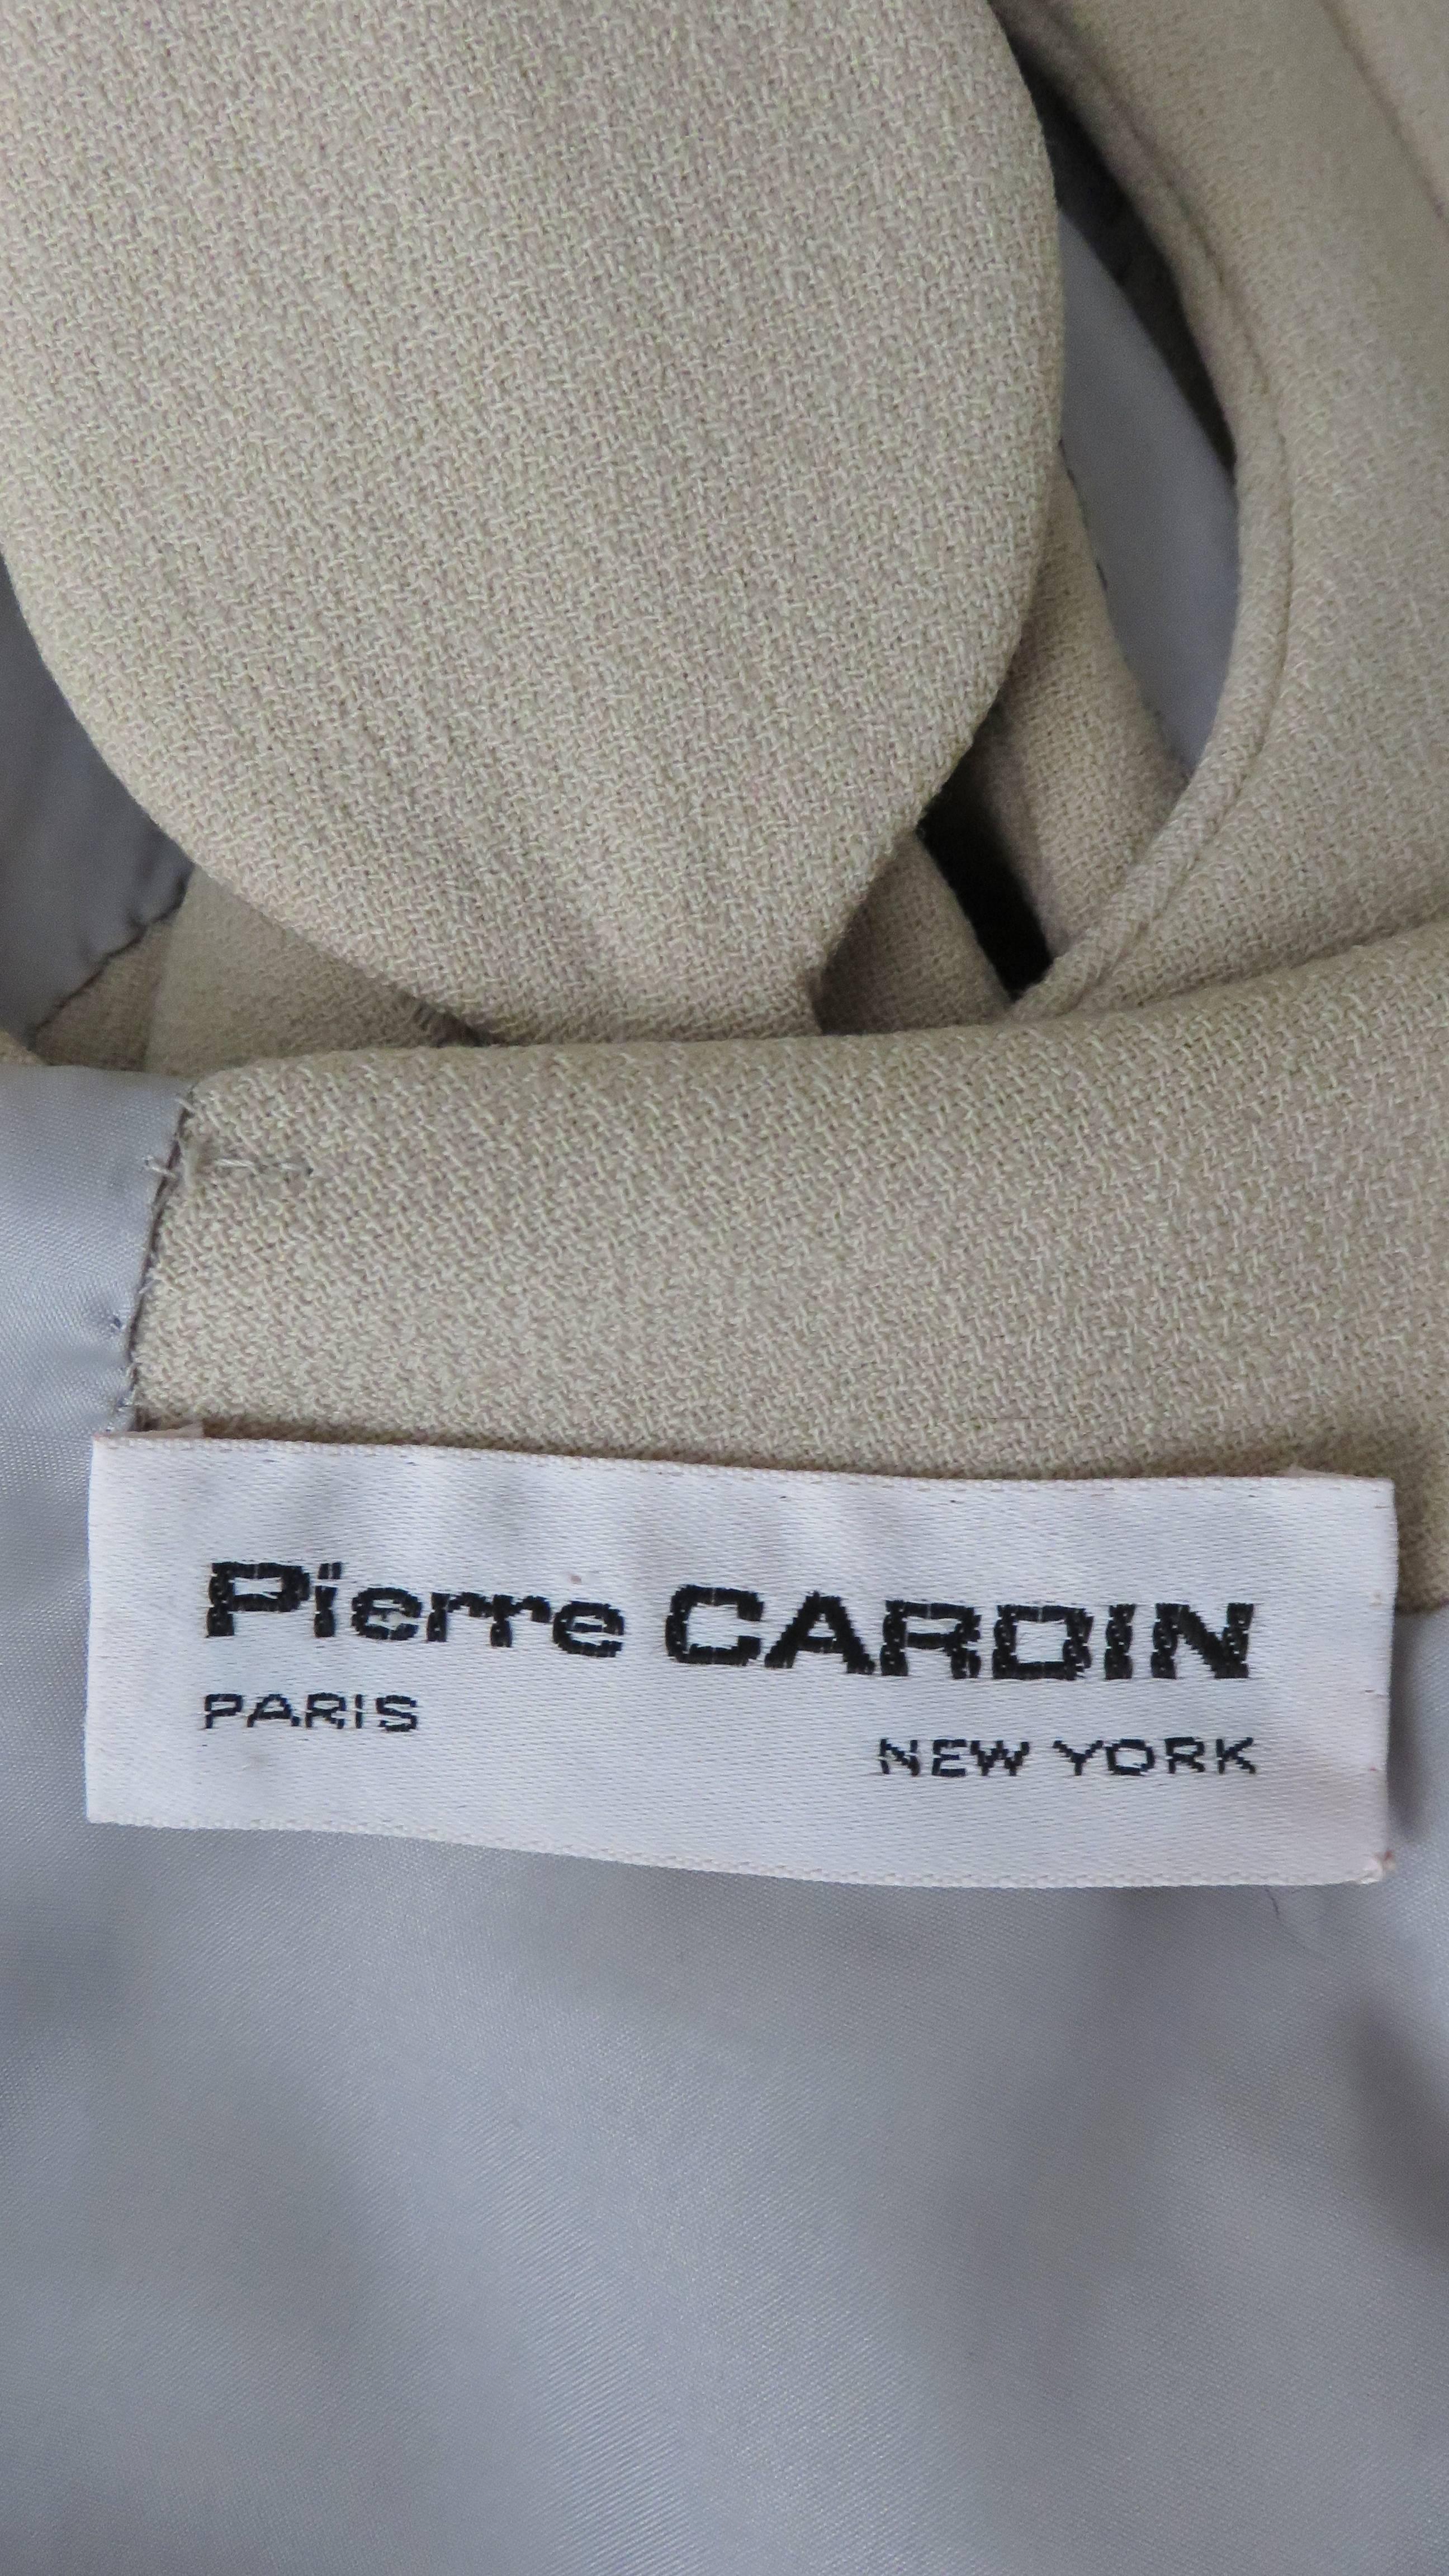  Pierre Cardin 1960s Dress with Cut out Hem 7